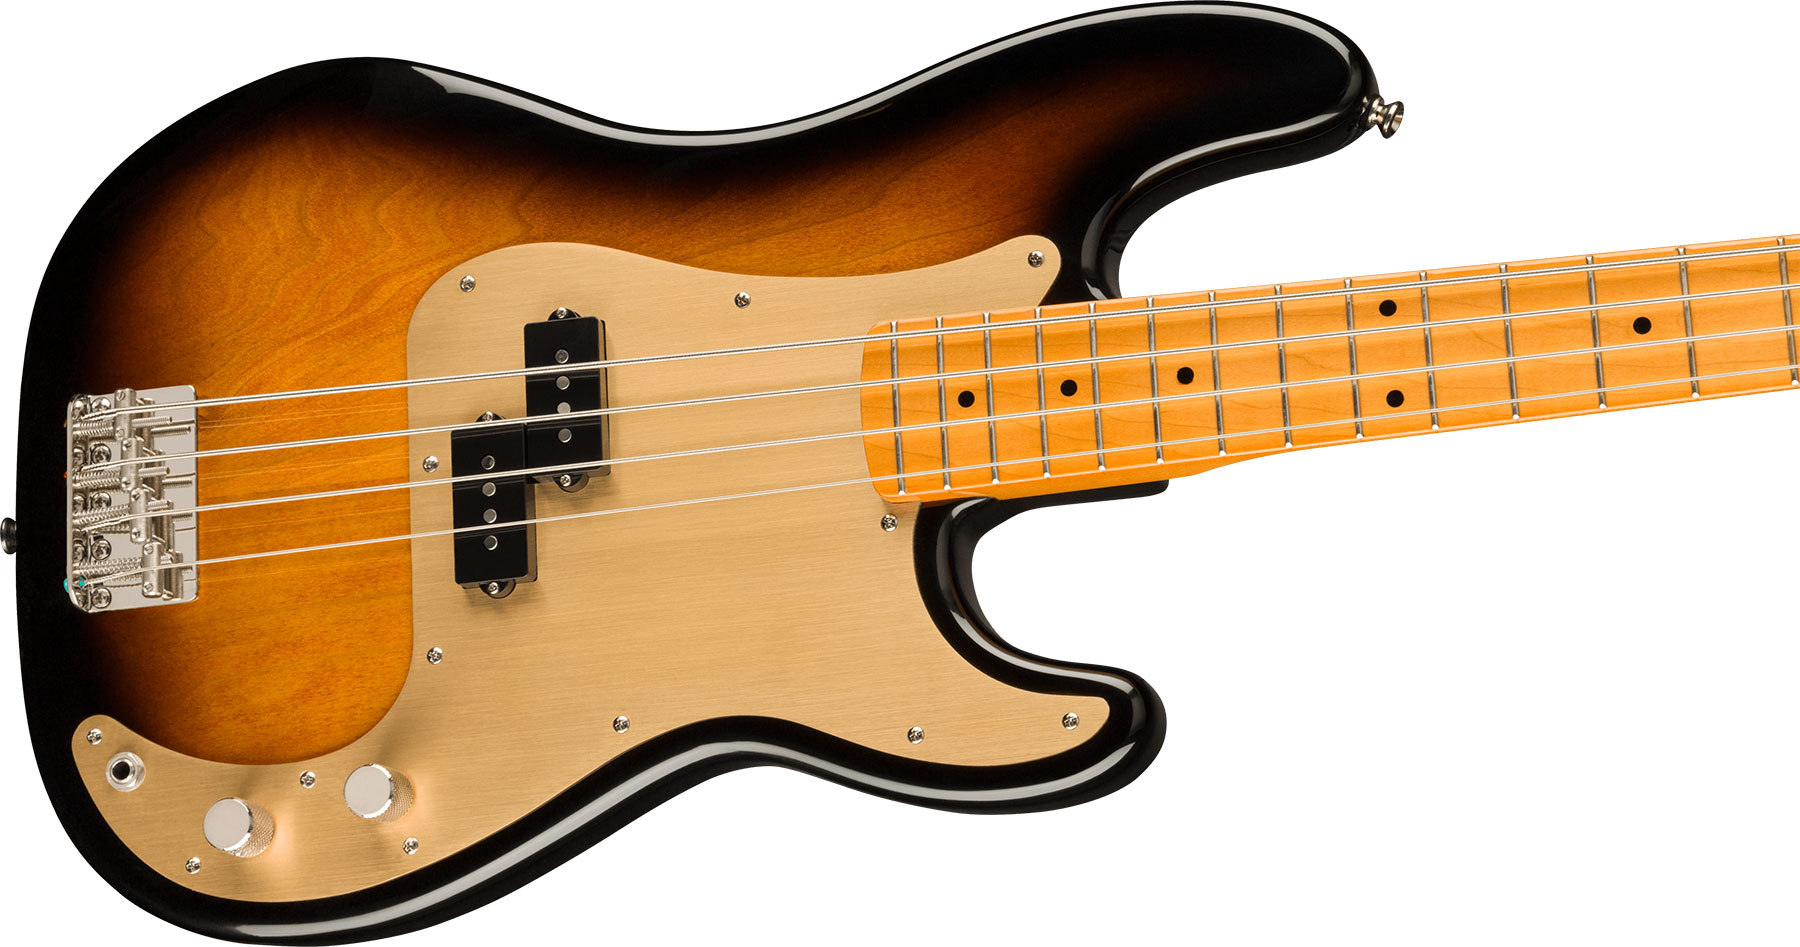 Squier Precision Bass Late '50s Classic Vibe Fsr Ltd Mn - 2-color Sunburst - Solid body elektrische bas - Variation 2